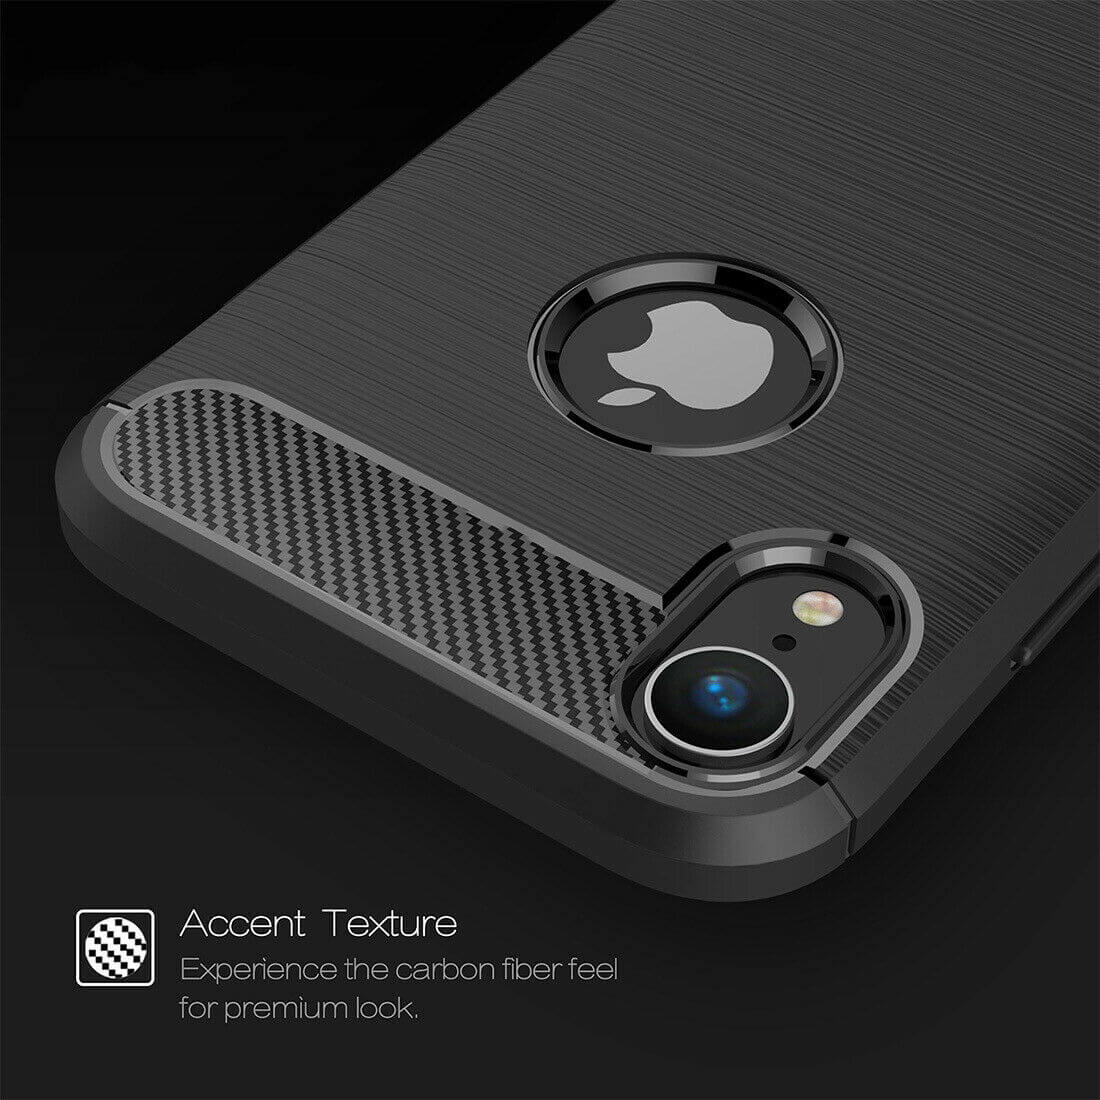 For Apple iPhone XR Carbon Fibre Design Case TPU Cover - Black